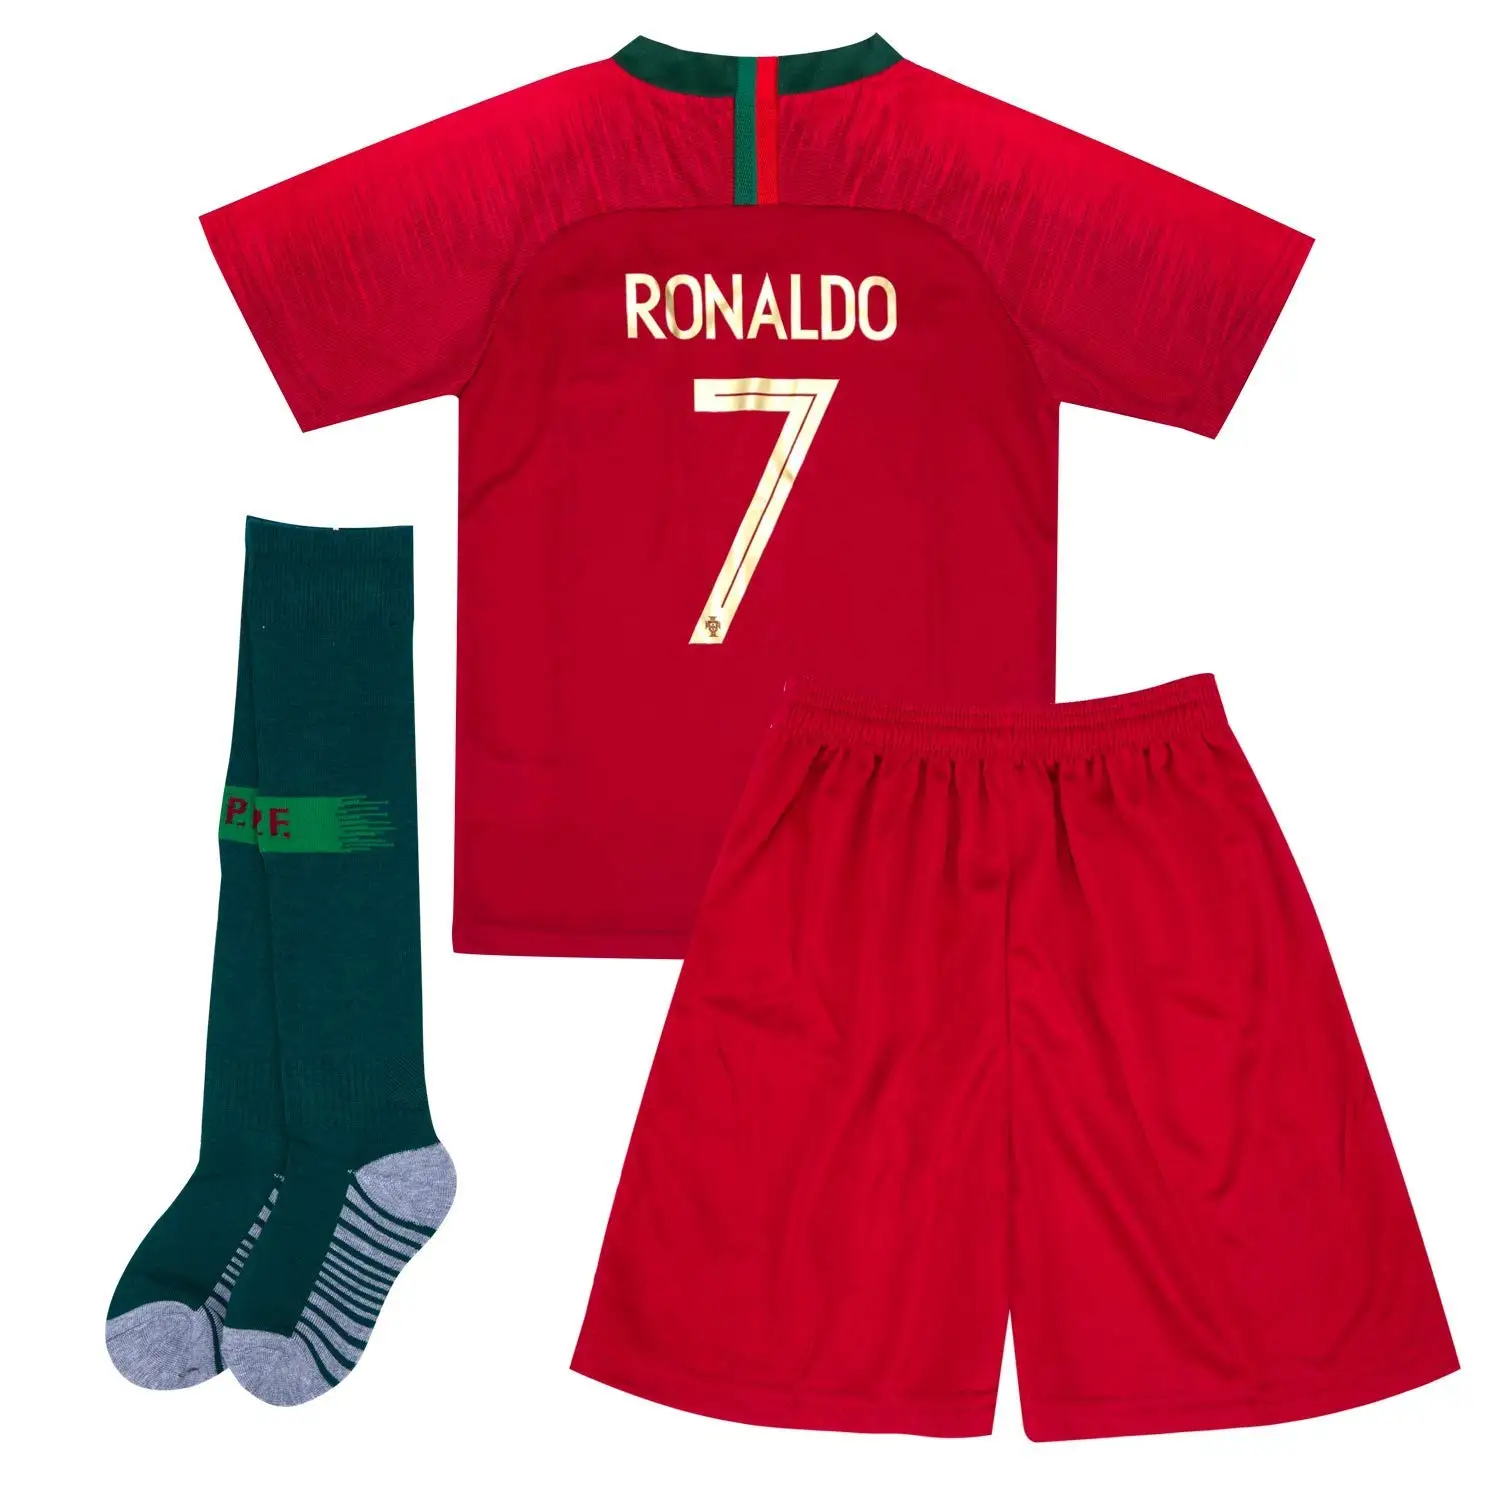 ronaldo portugal jersey youth